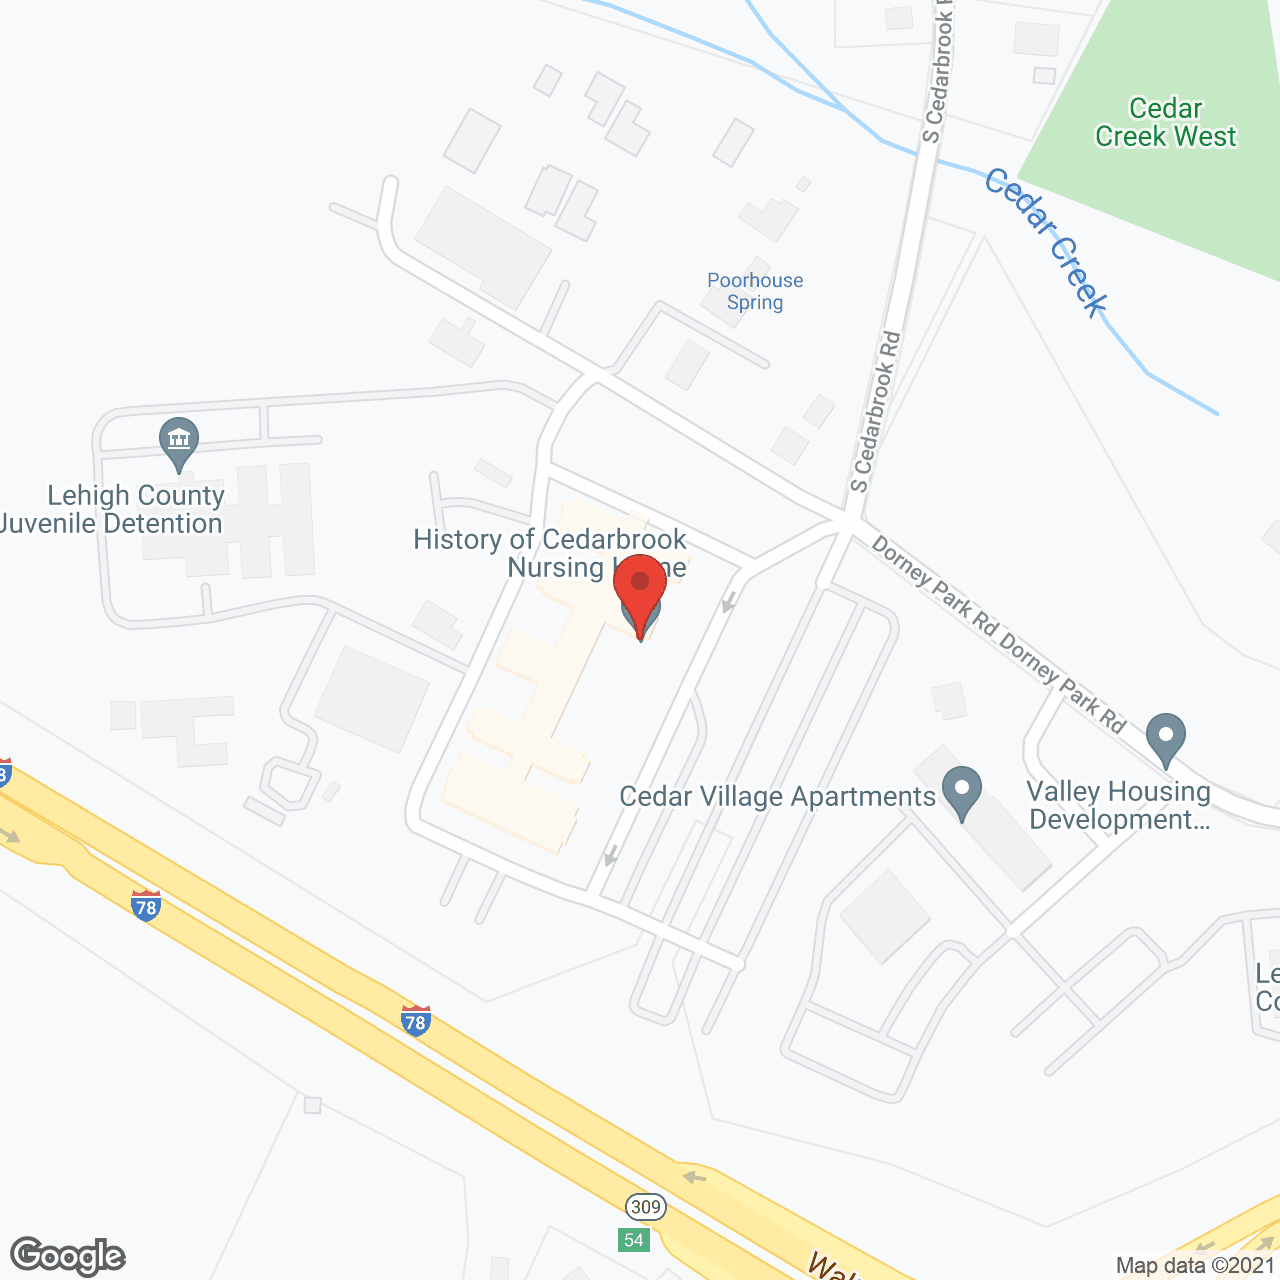 Cedarbrook Nursing Home in google map